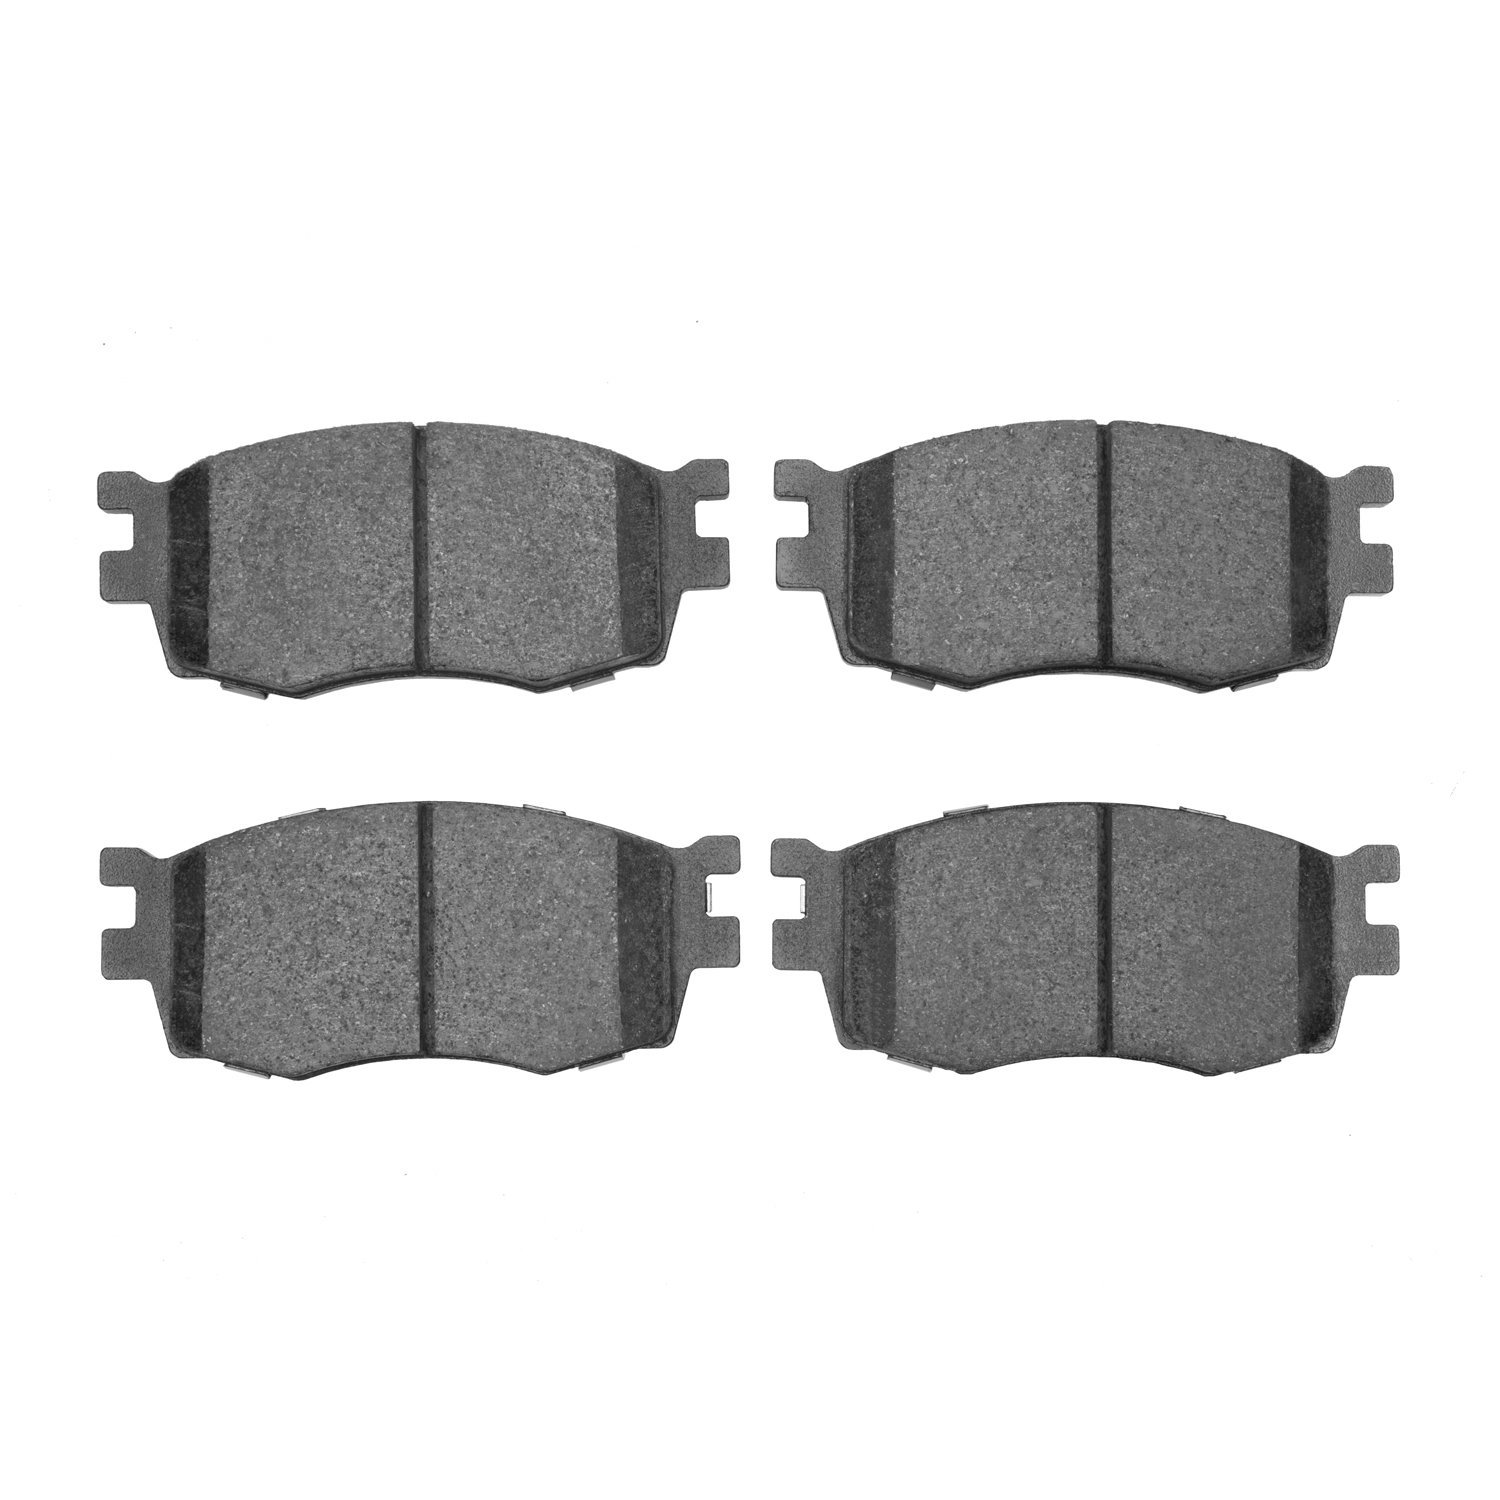 1551-1156-00 5000 Advanced Ceramic Brake Pads, 2006-2012 Multiple Makes/Models, Position: Front